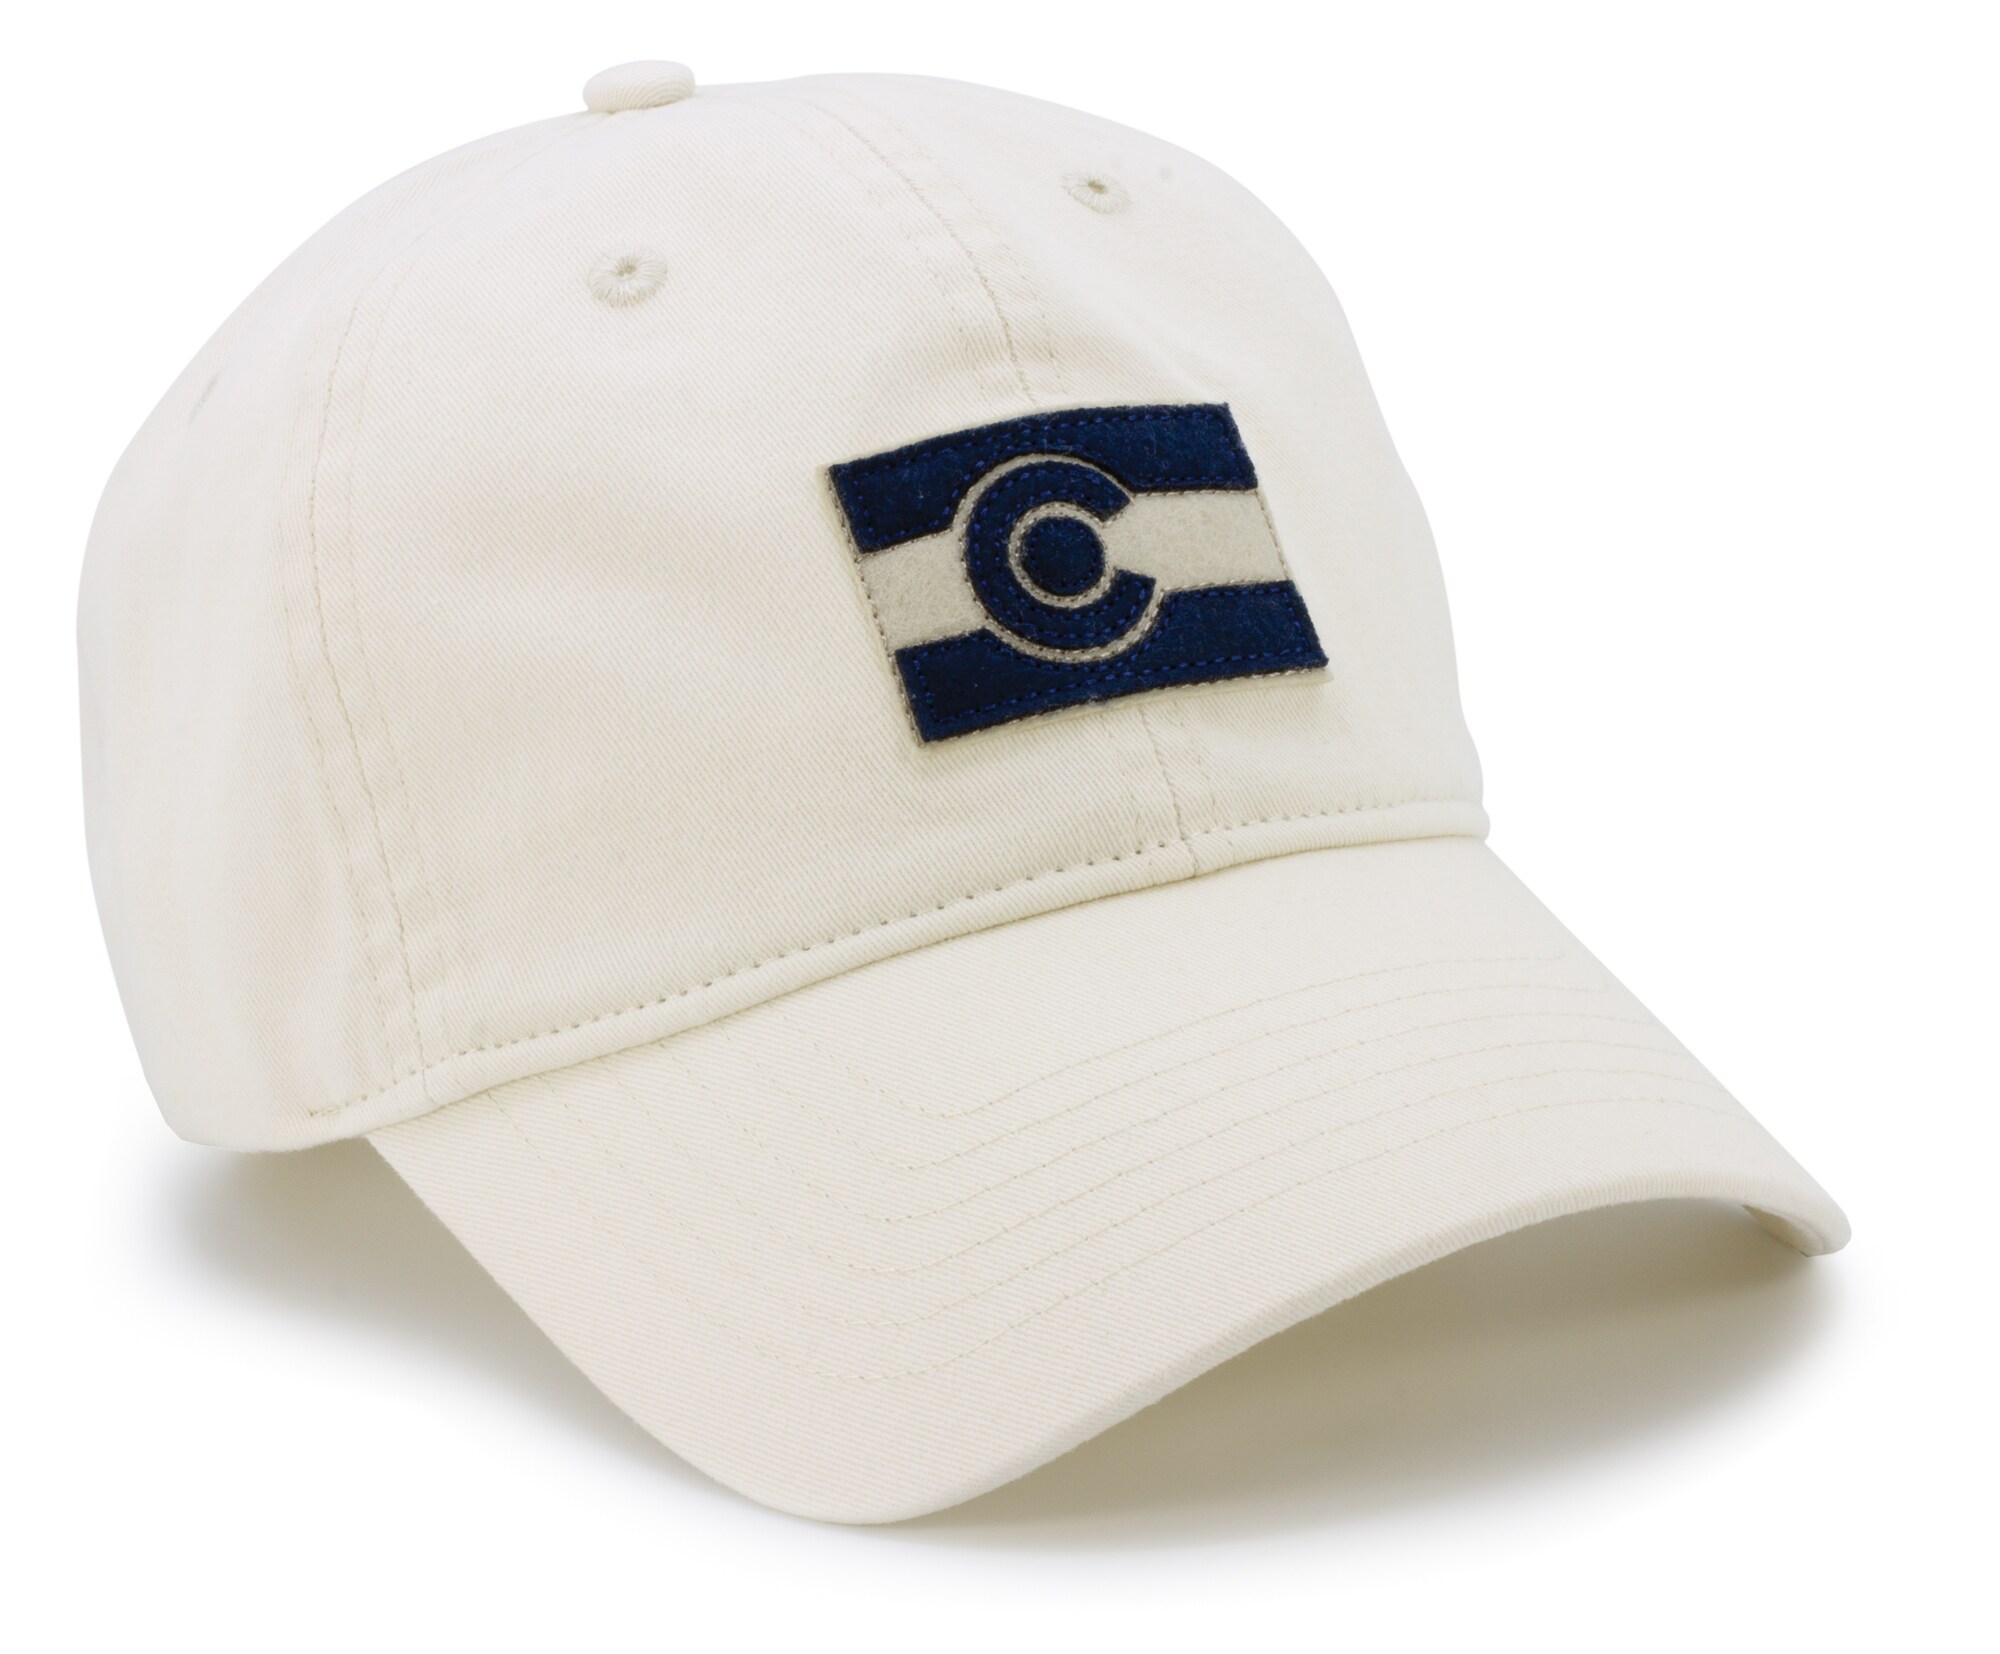 Infinity Brands Men's Khaki Cotton Baseball Cap in the Hats